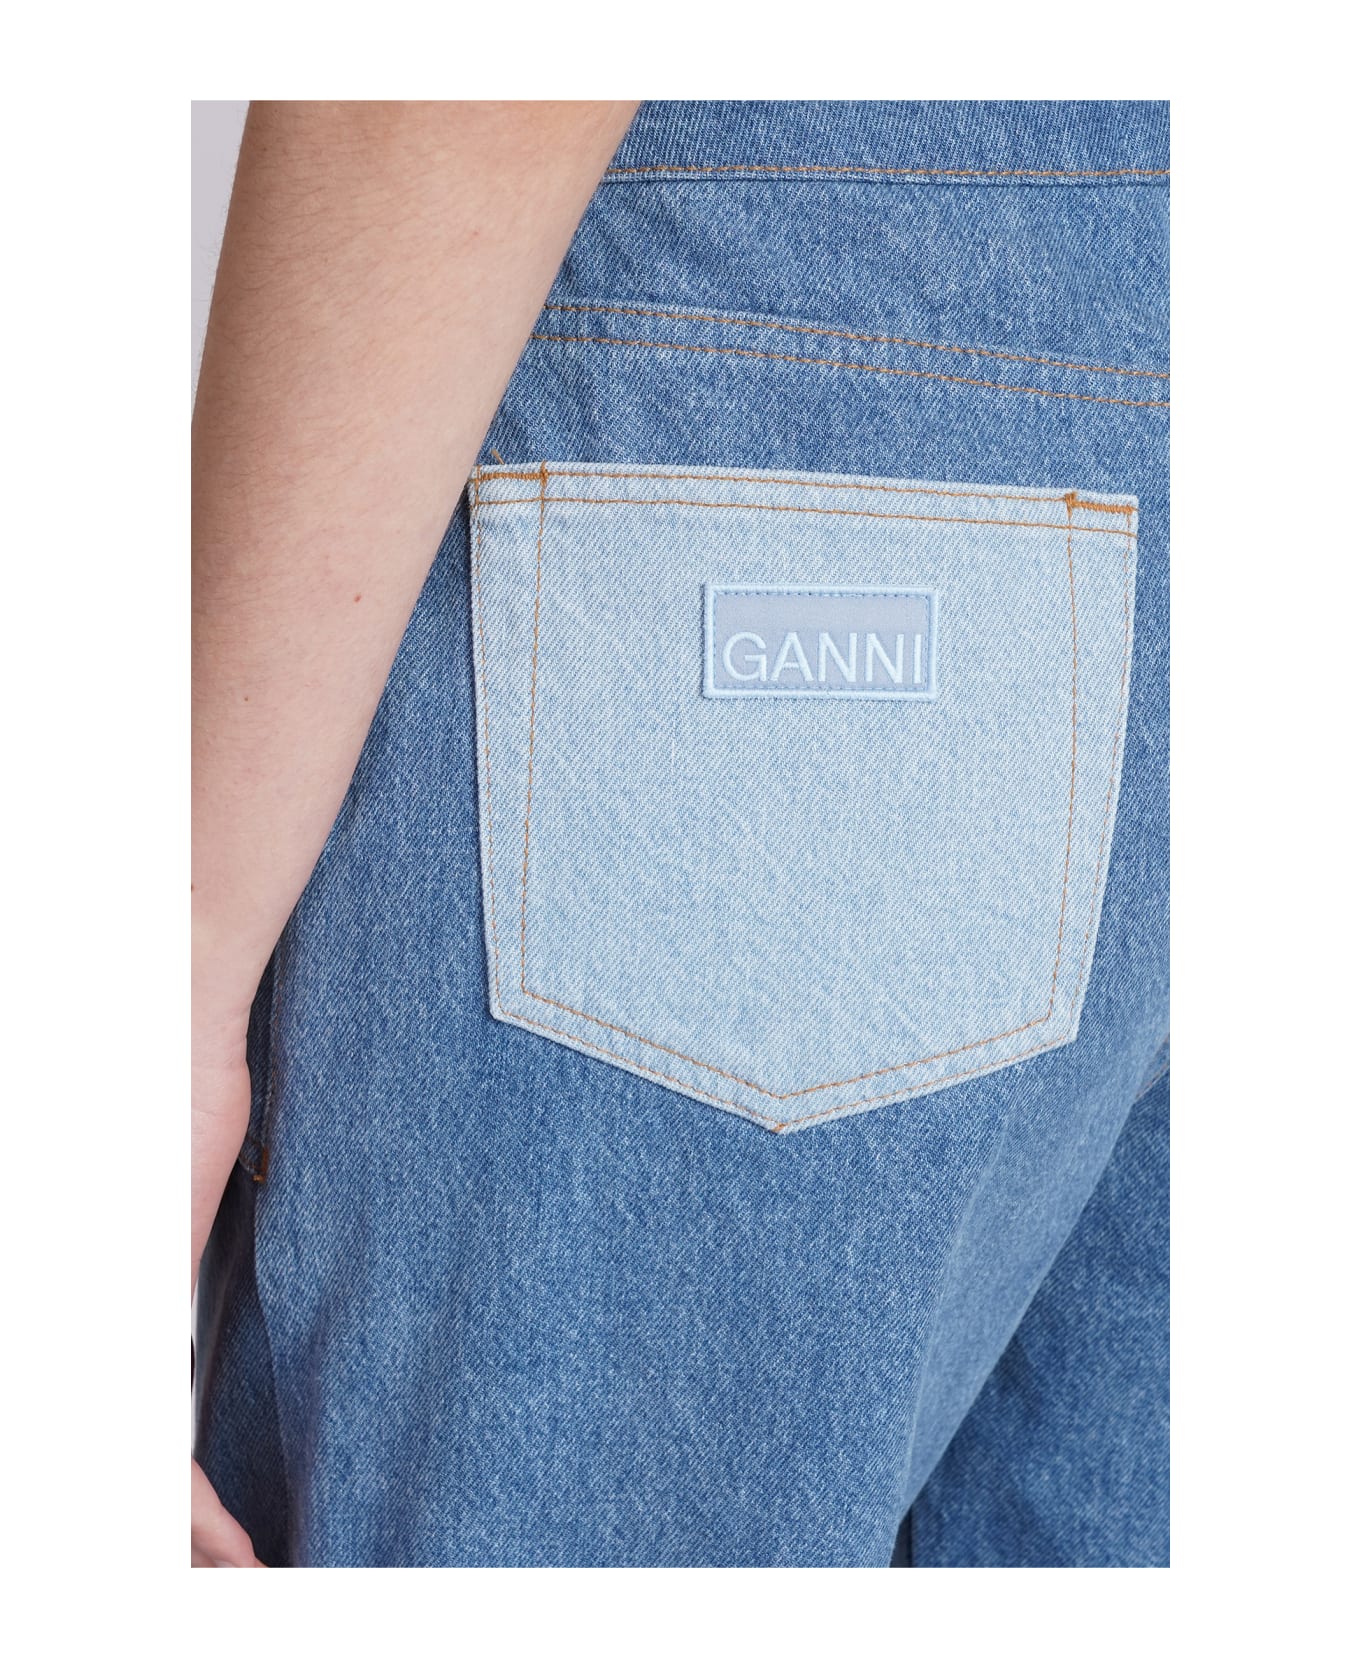 Ganni Jeans In Blue Cotton - BLUE